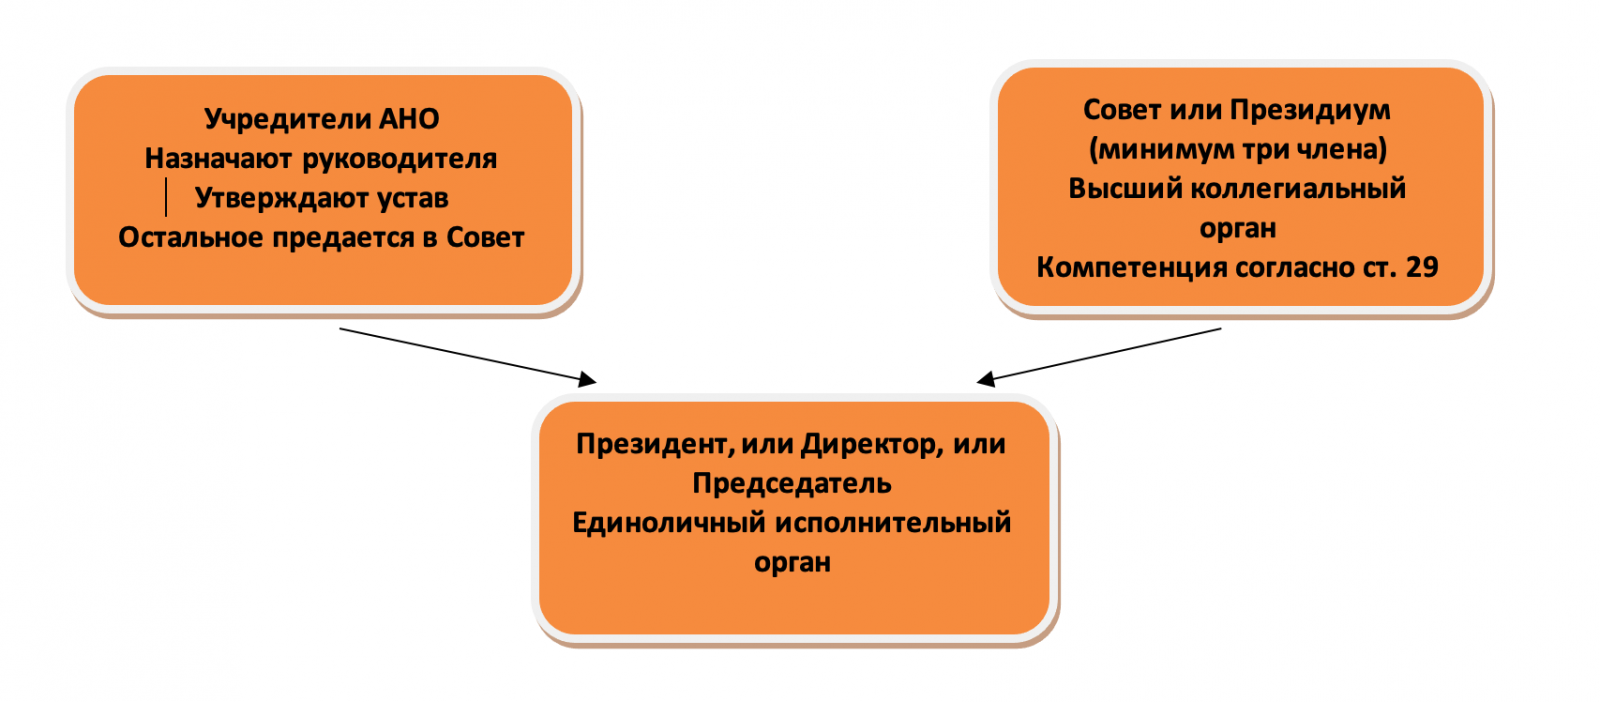 структура управления ано с двумя учредителями